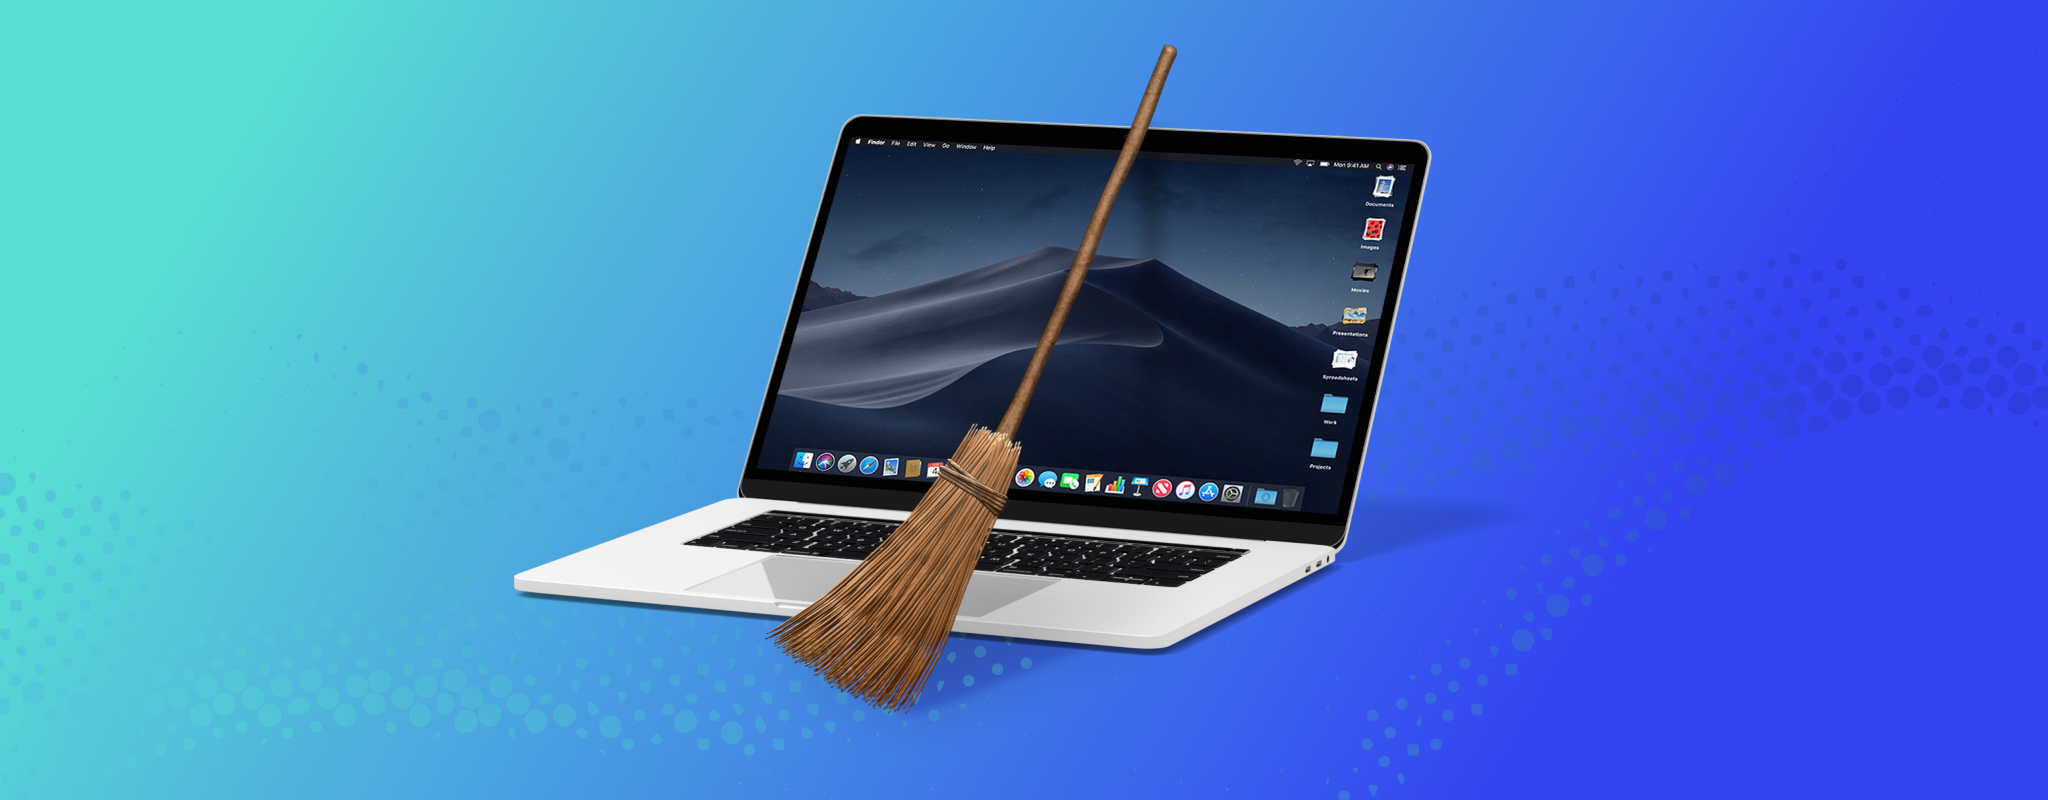 free mac cleaner reviews 2015